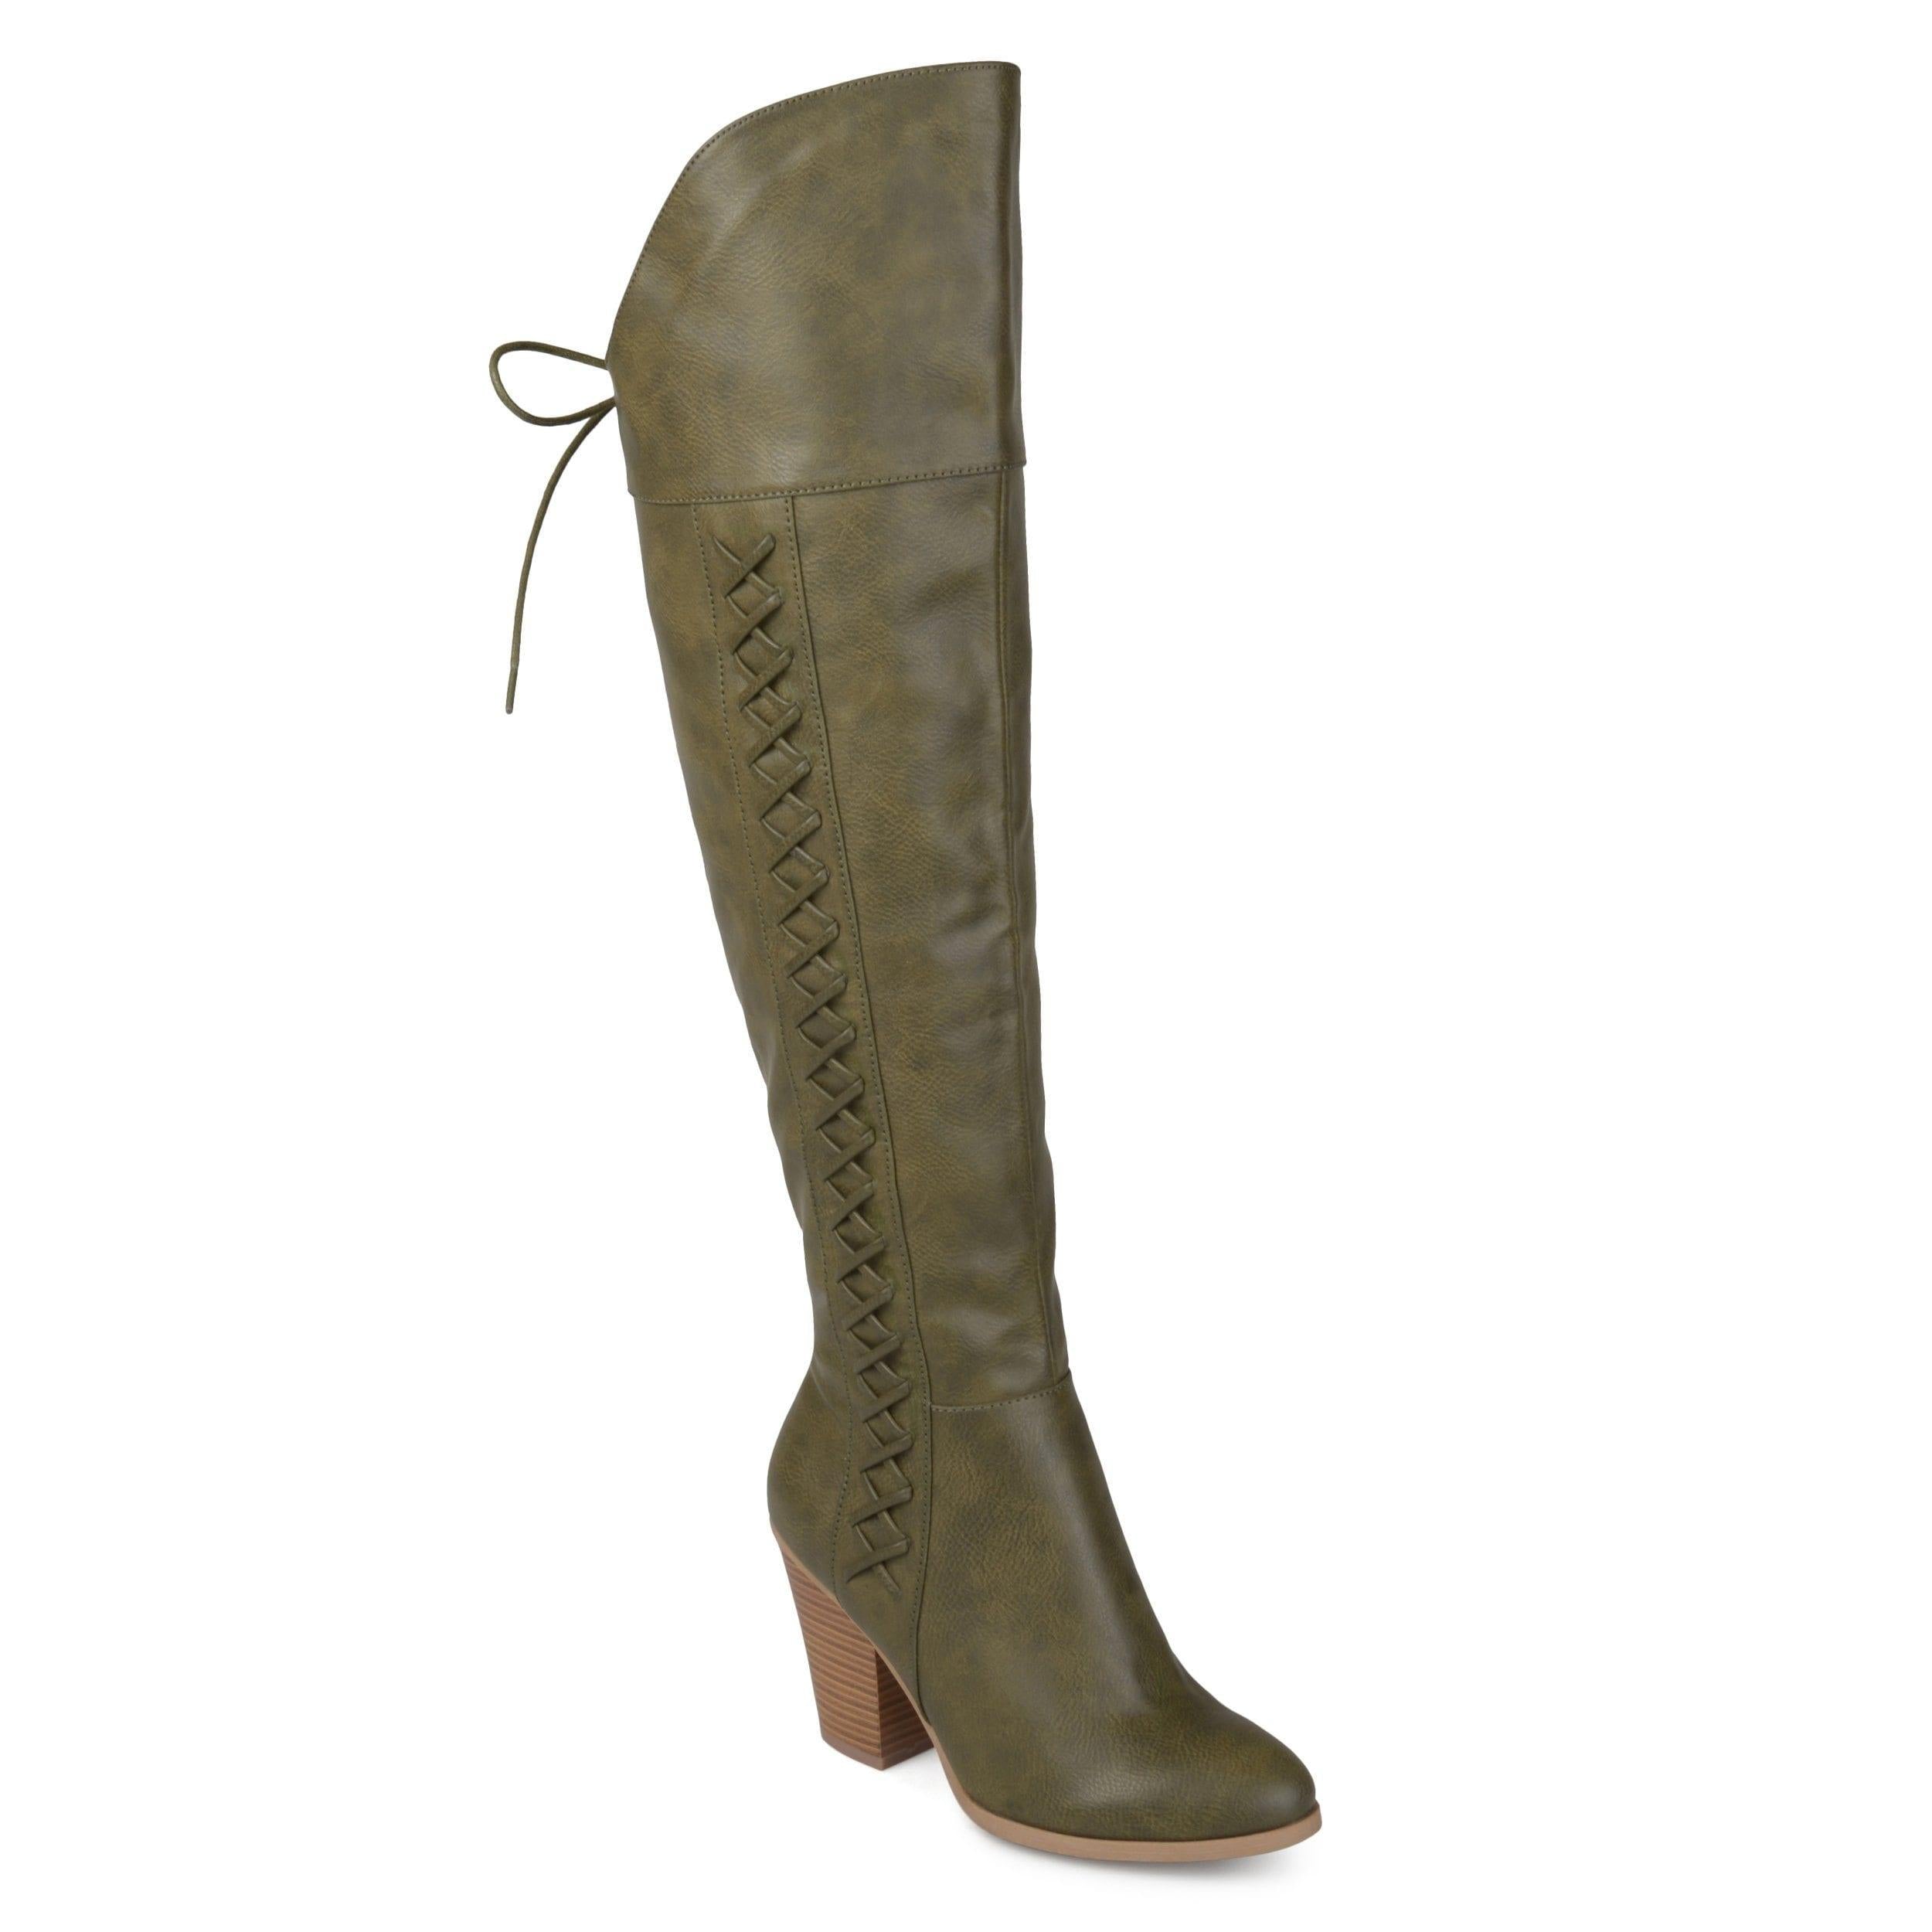 Spritz-P Boot | Women's Over-The-Knee Boots | Journee Collection